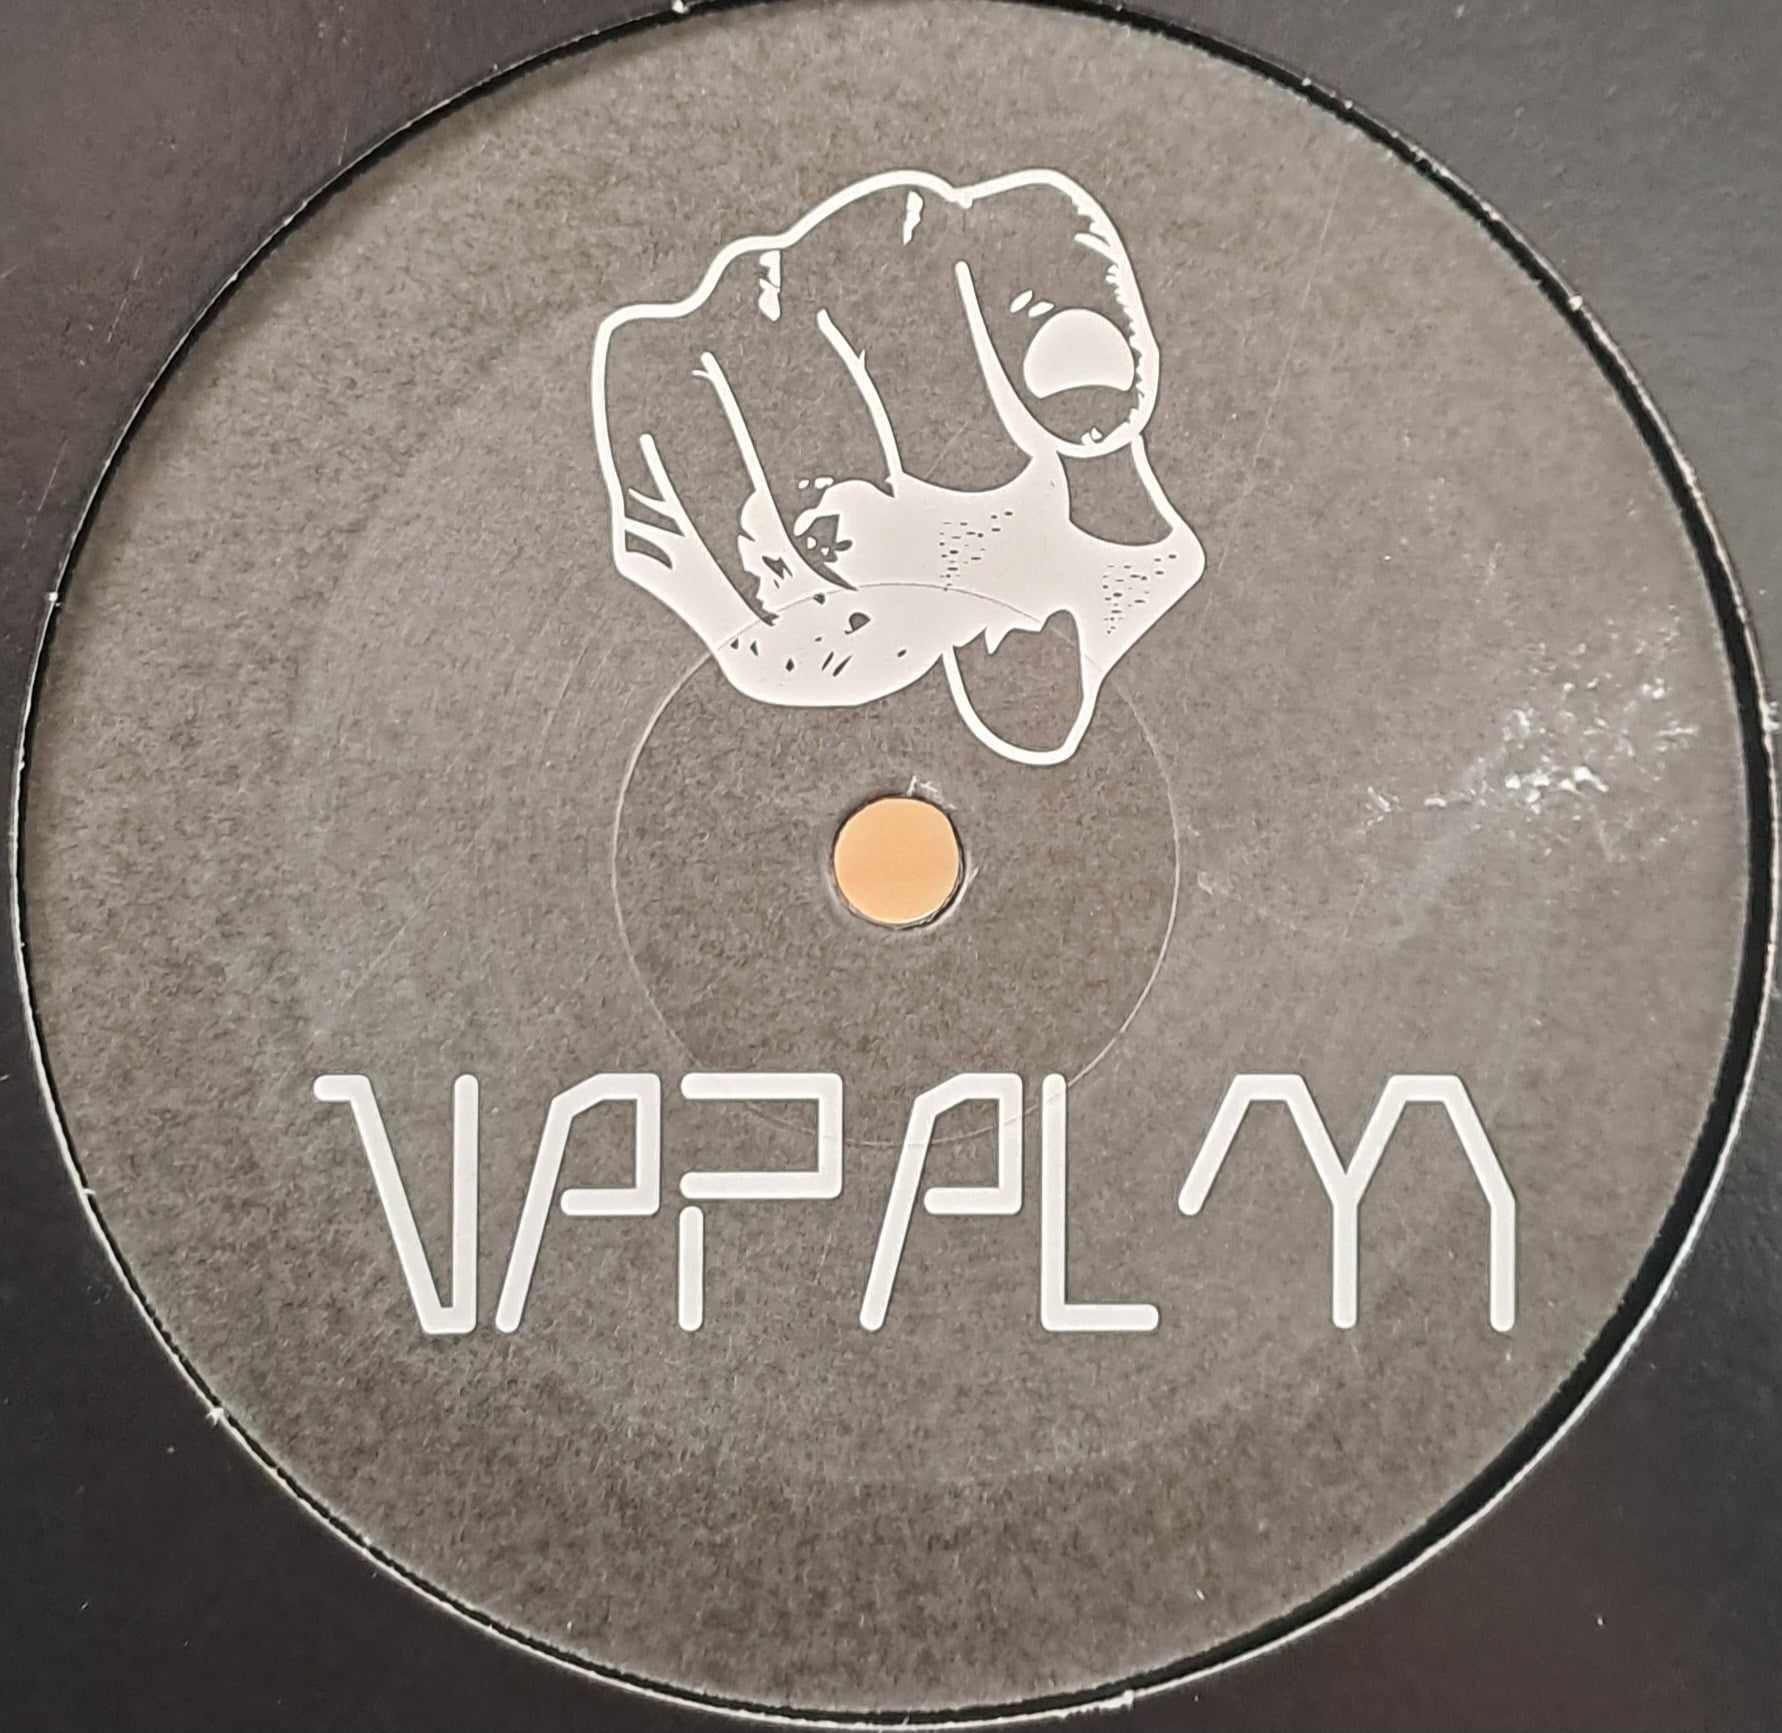 Napalm 8 - vinyle hardcore